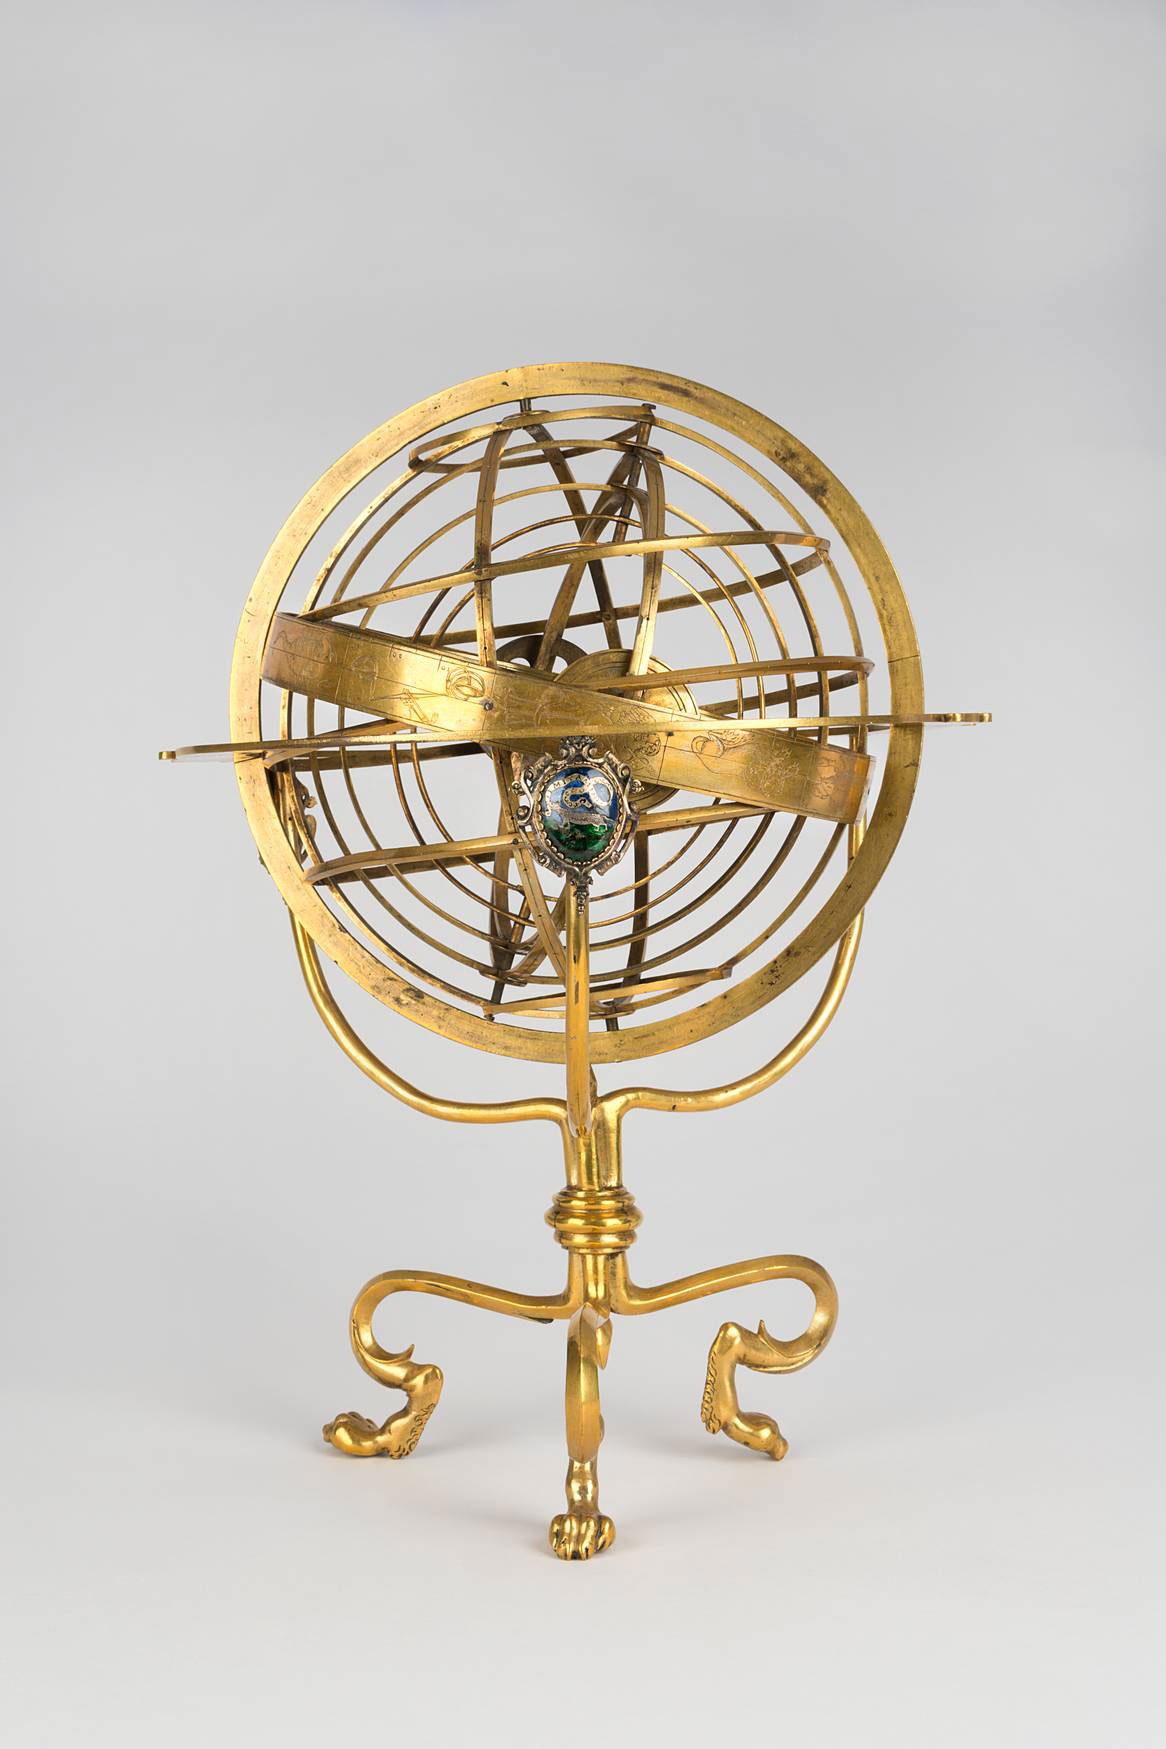 <BODY><div>Euphrosino di Lorenzo Volpaia, armillary sphere, measuring instrument, 1553</div><div>© MAK</div><div> </div></BODY>